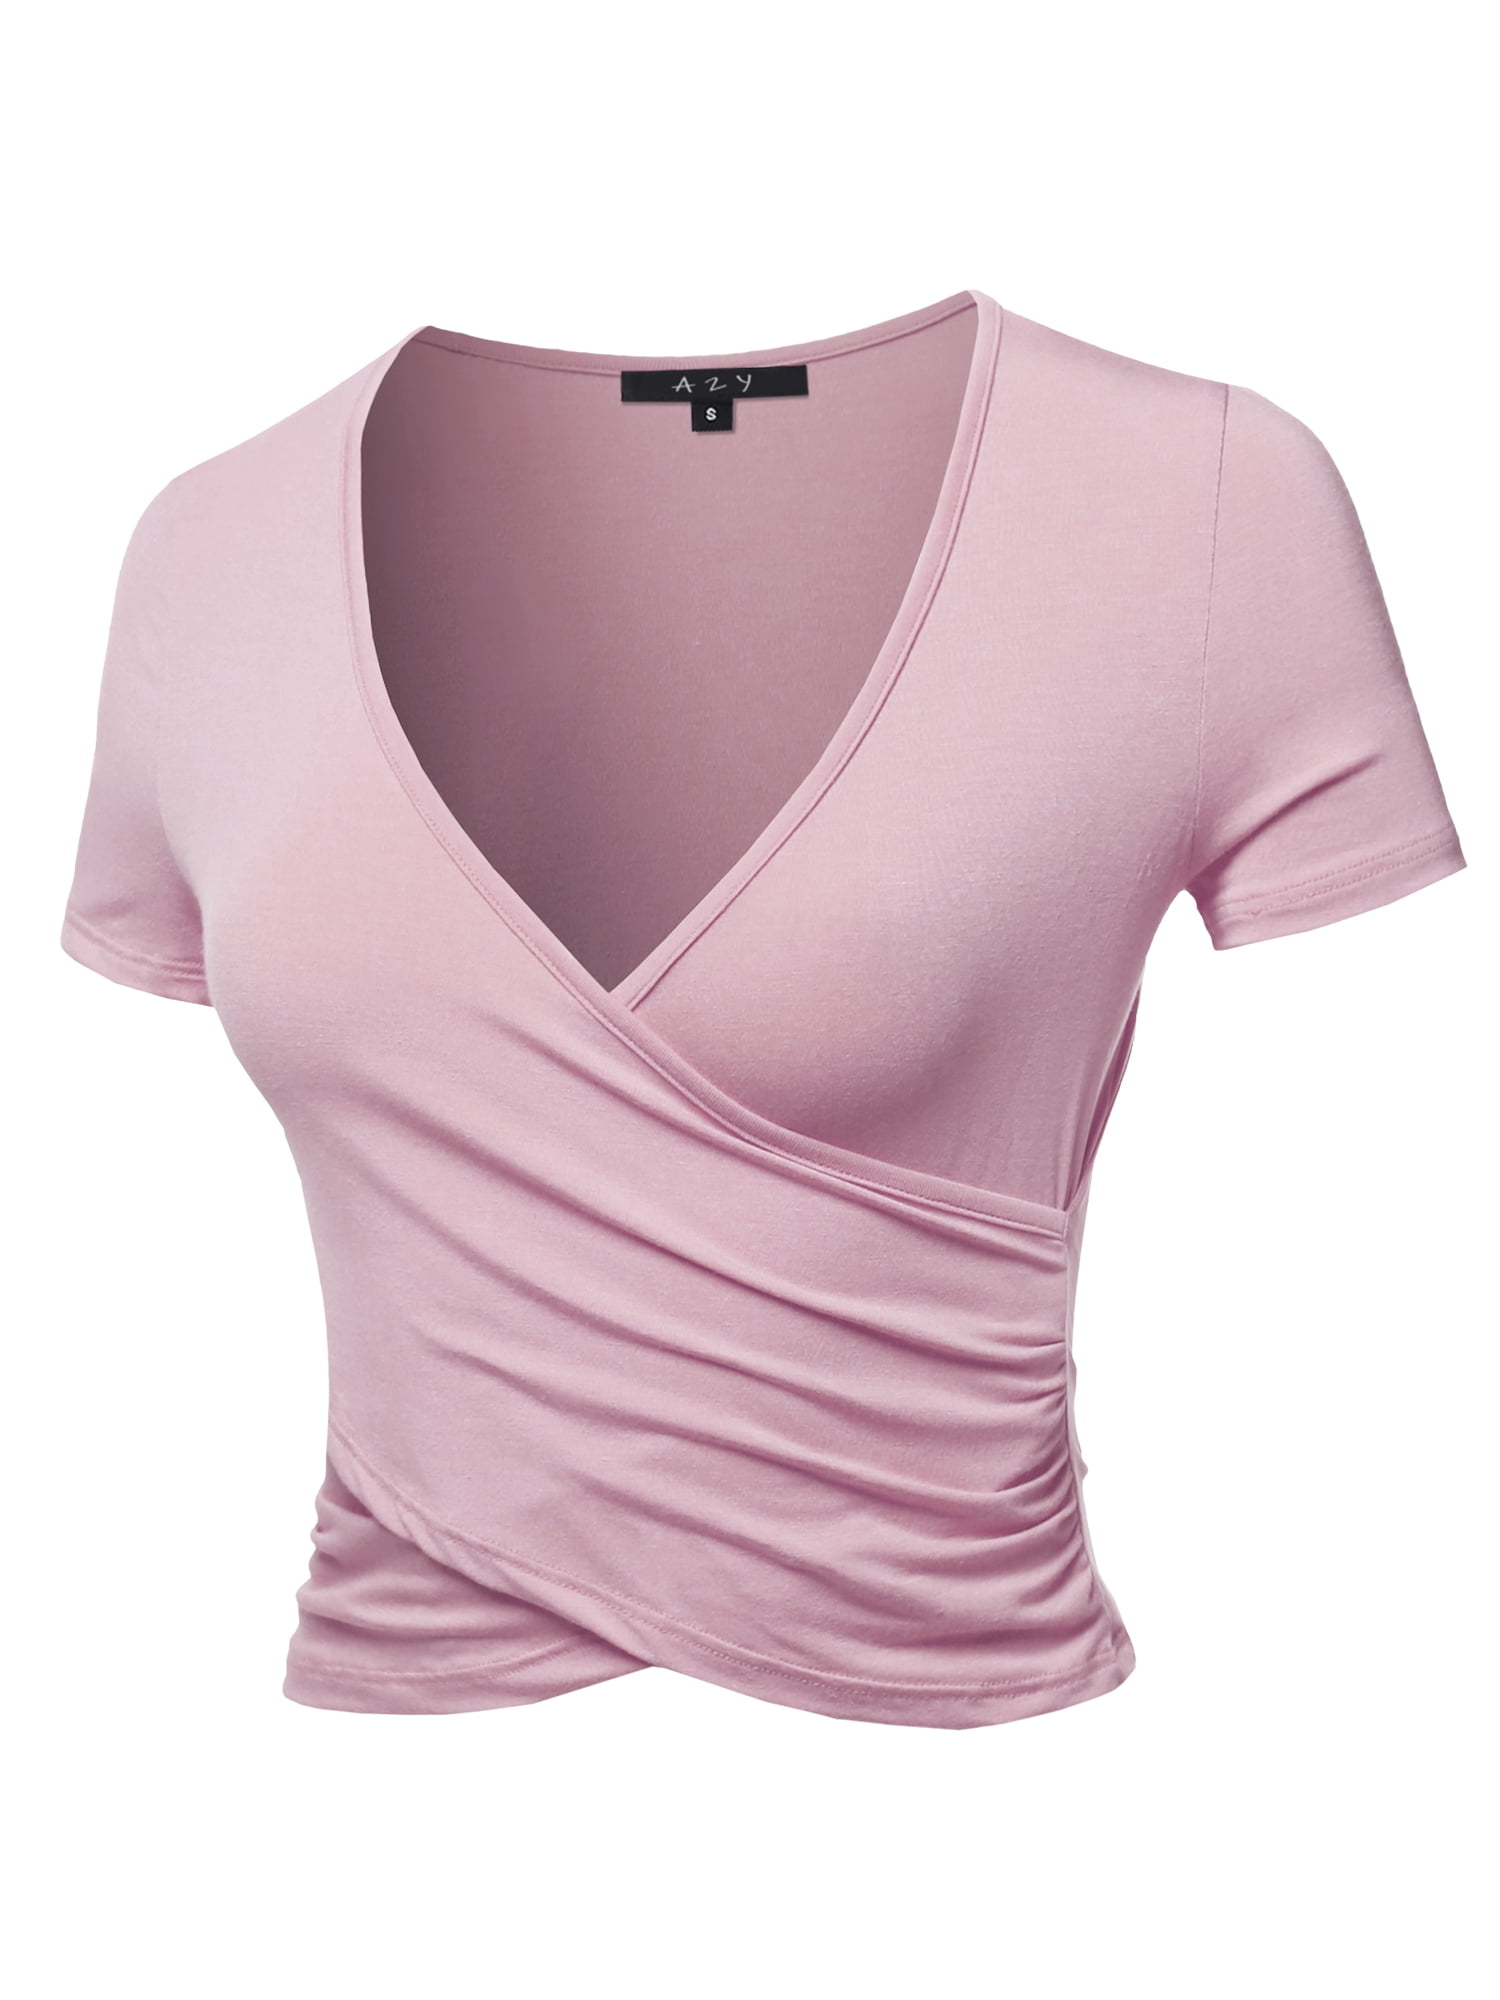 A Y A Y Women S Deep V Neck Short Sleeve Unique Slim Fit Cross Wrap Shirt Crop Tops Dusty Pink